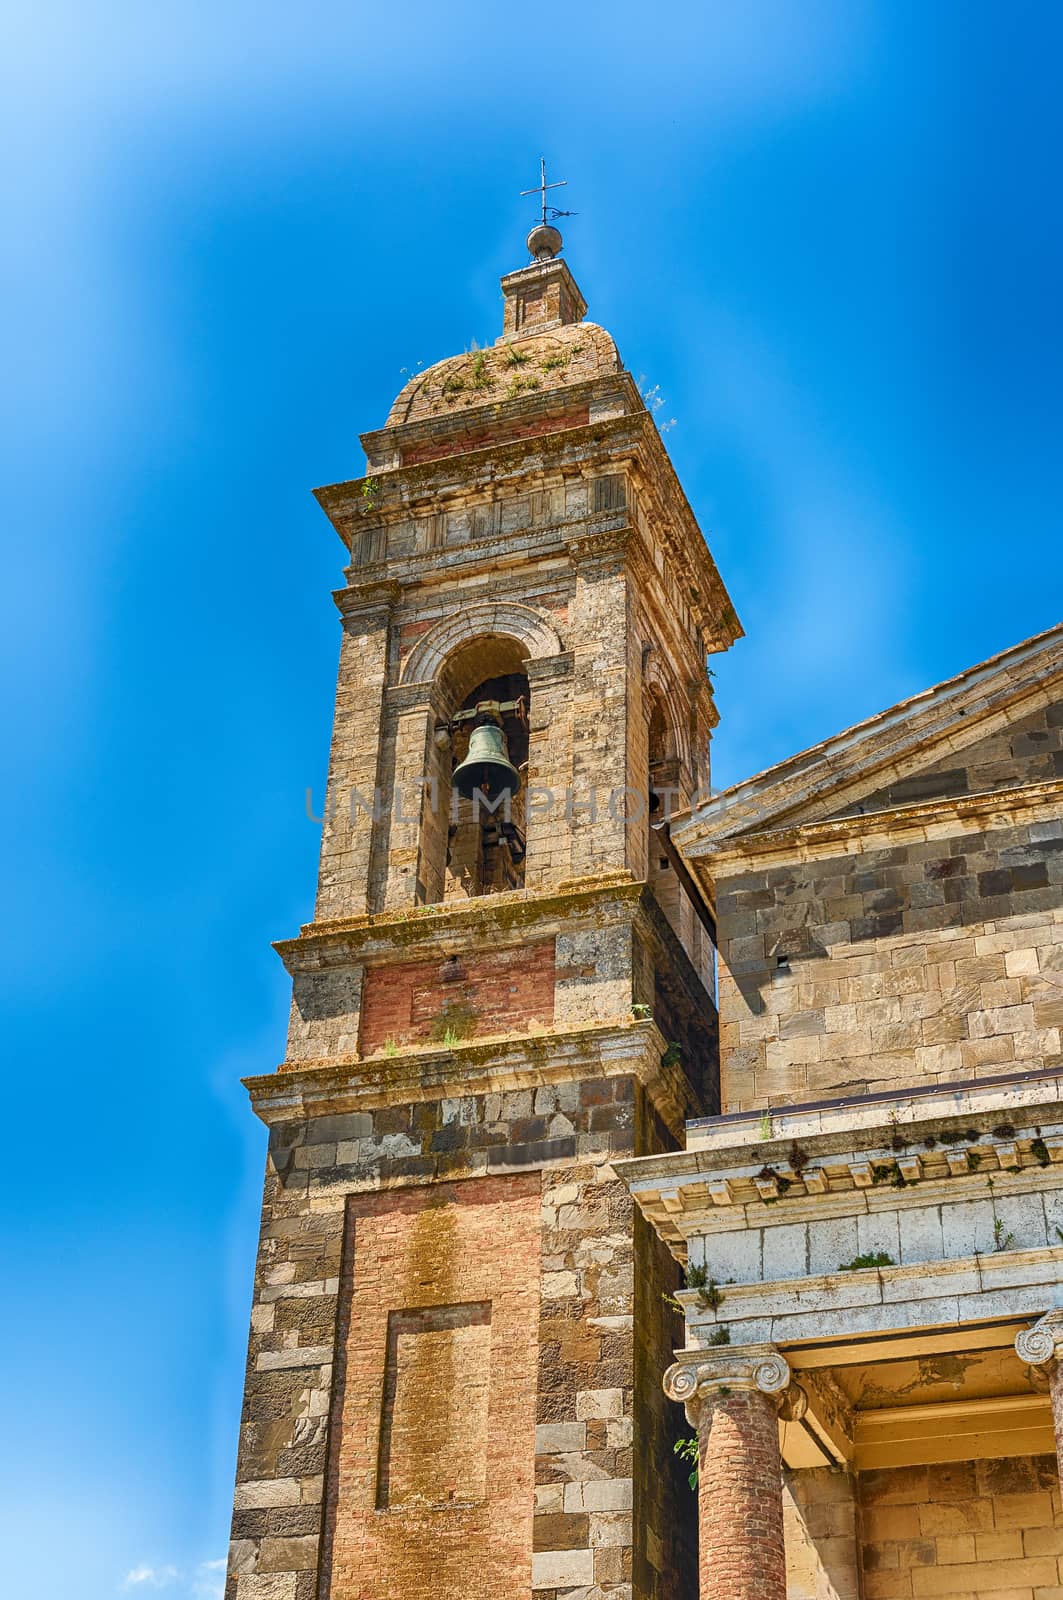 Belltower of the Roman Catholic Cathedral of Montalcino, Italy by marcorubino